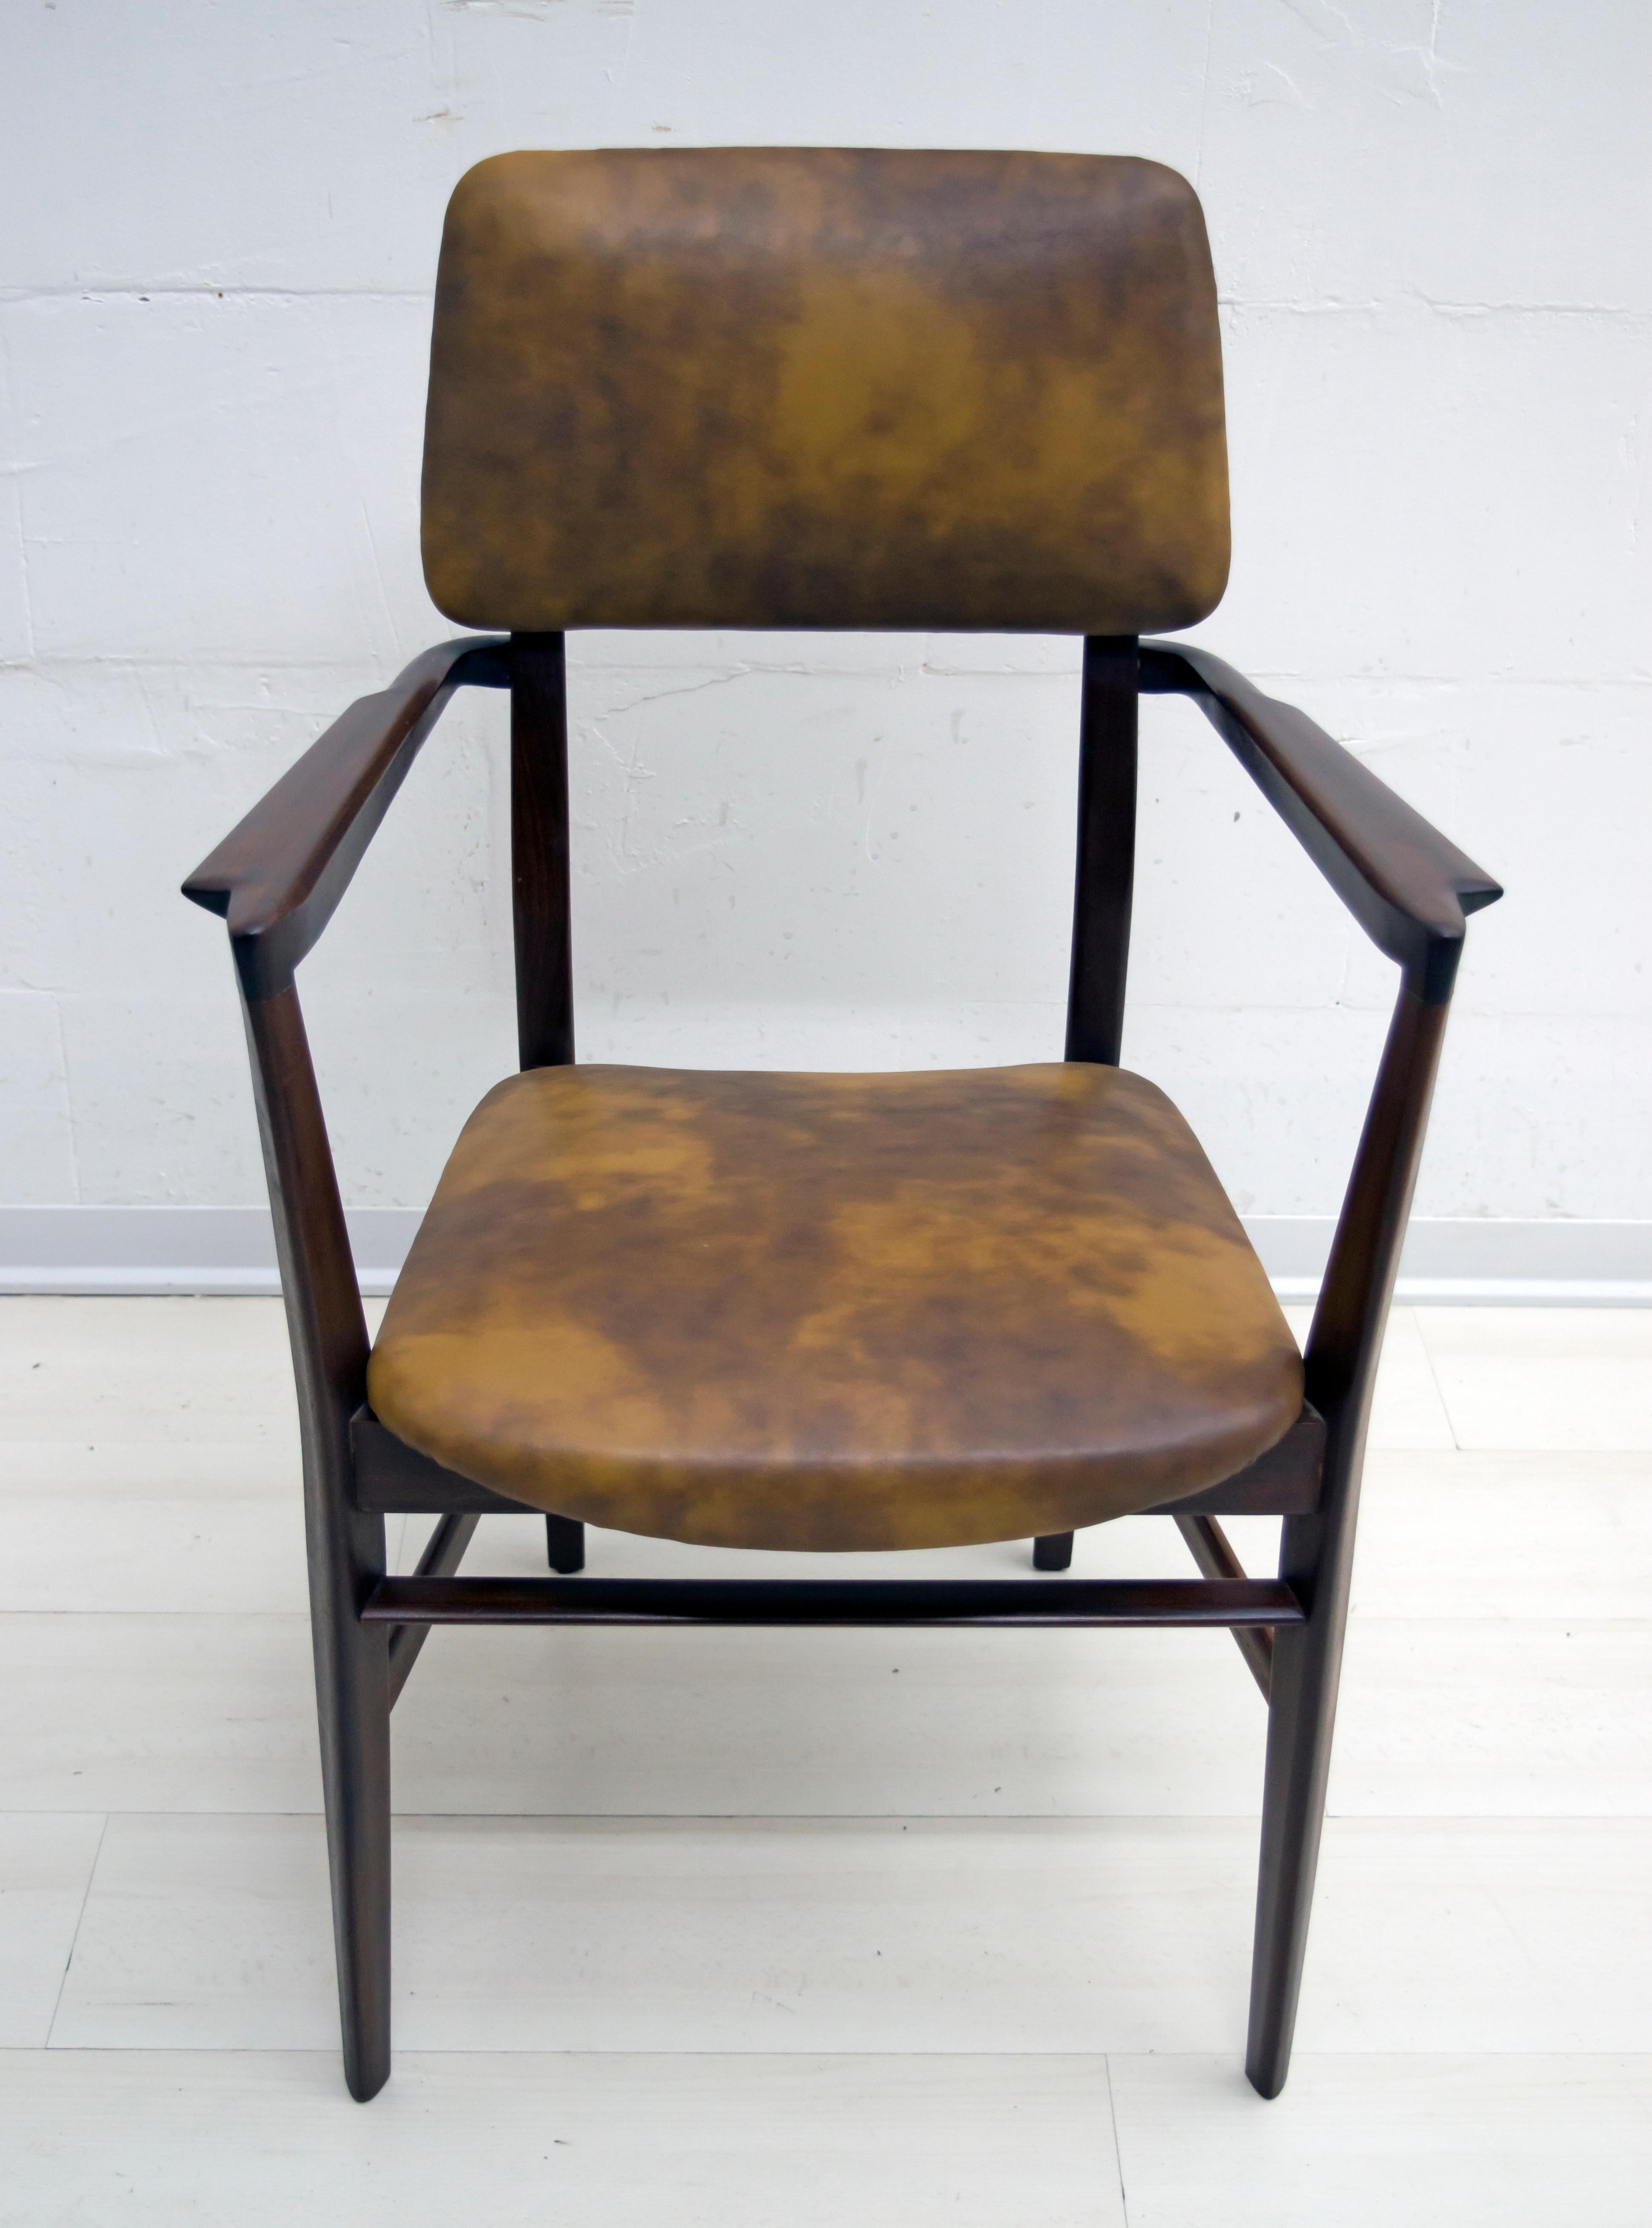 Vittorio Dassi Mid-Century Modern Italian Teakwood Writing Desk and Chair, 1950s For Sale 5